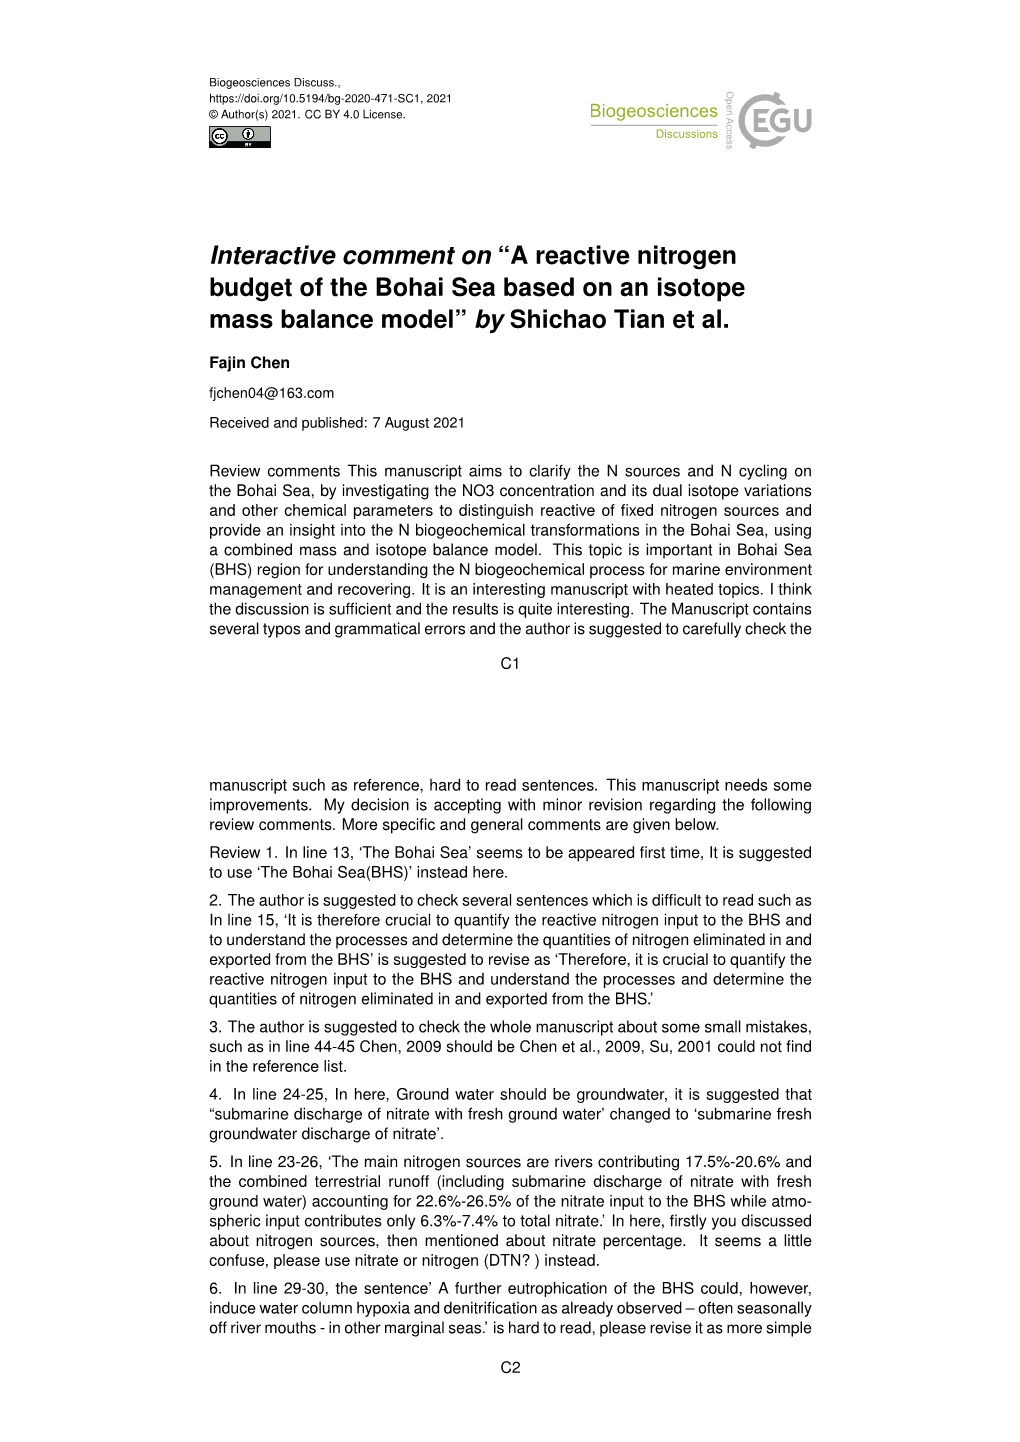 A Reactive Nitrogen Budget of the Bohai Sea Based on an Isotope Mass Balance Model” by Shichao Tian Et Al